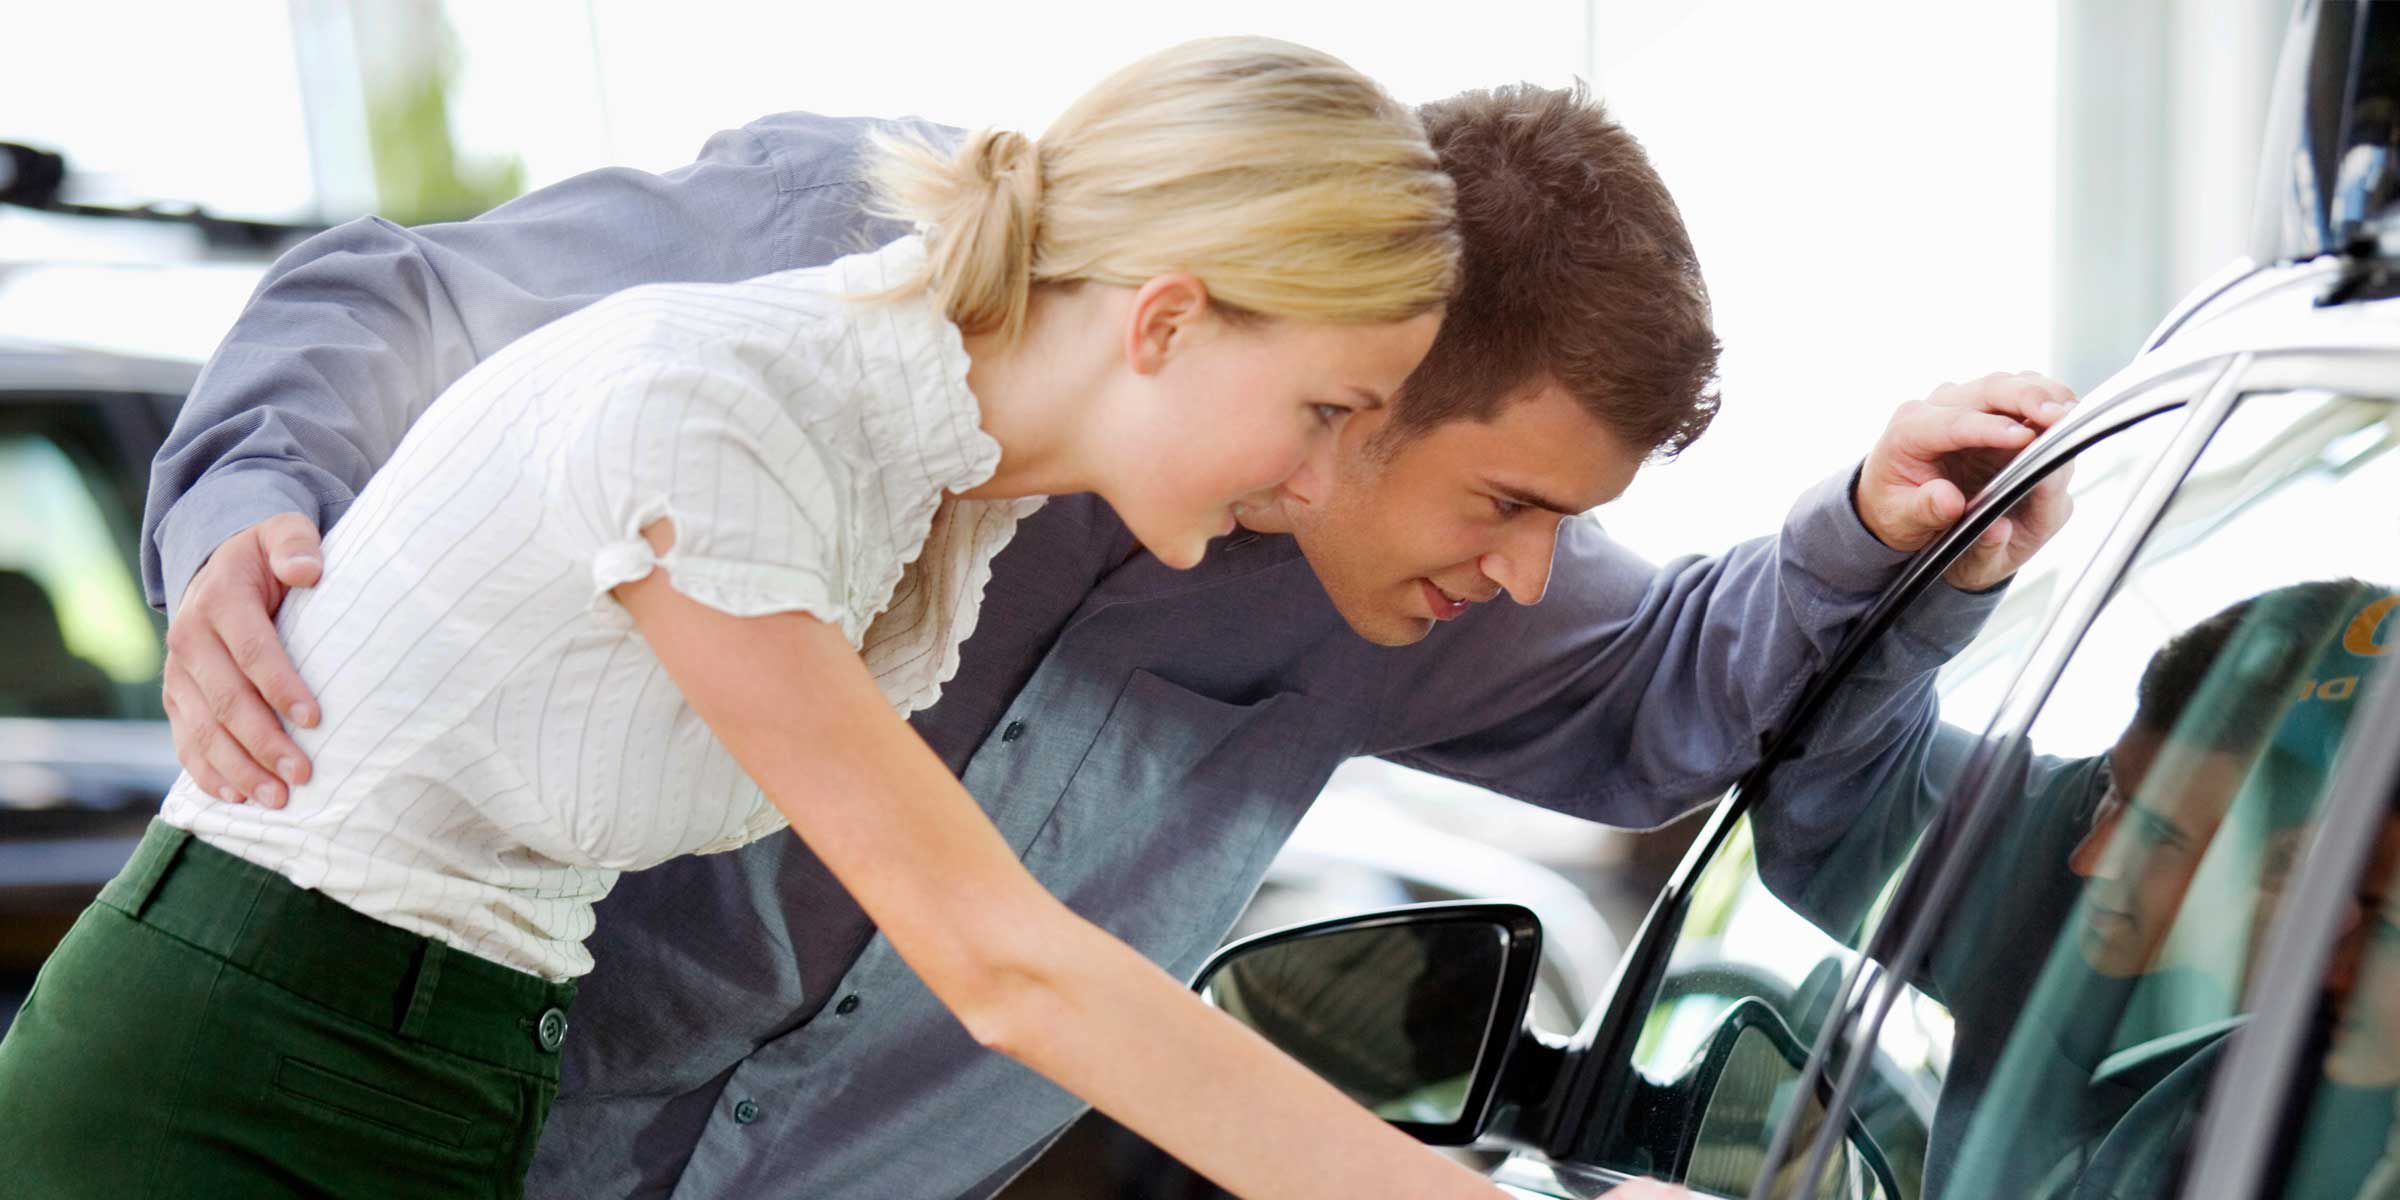  a man and woman looking at a car